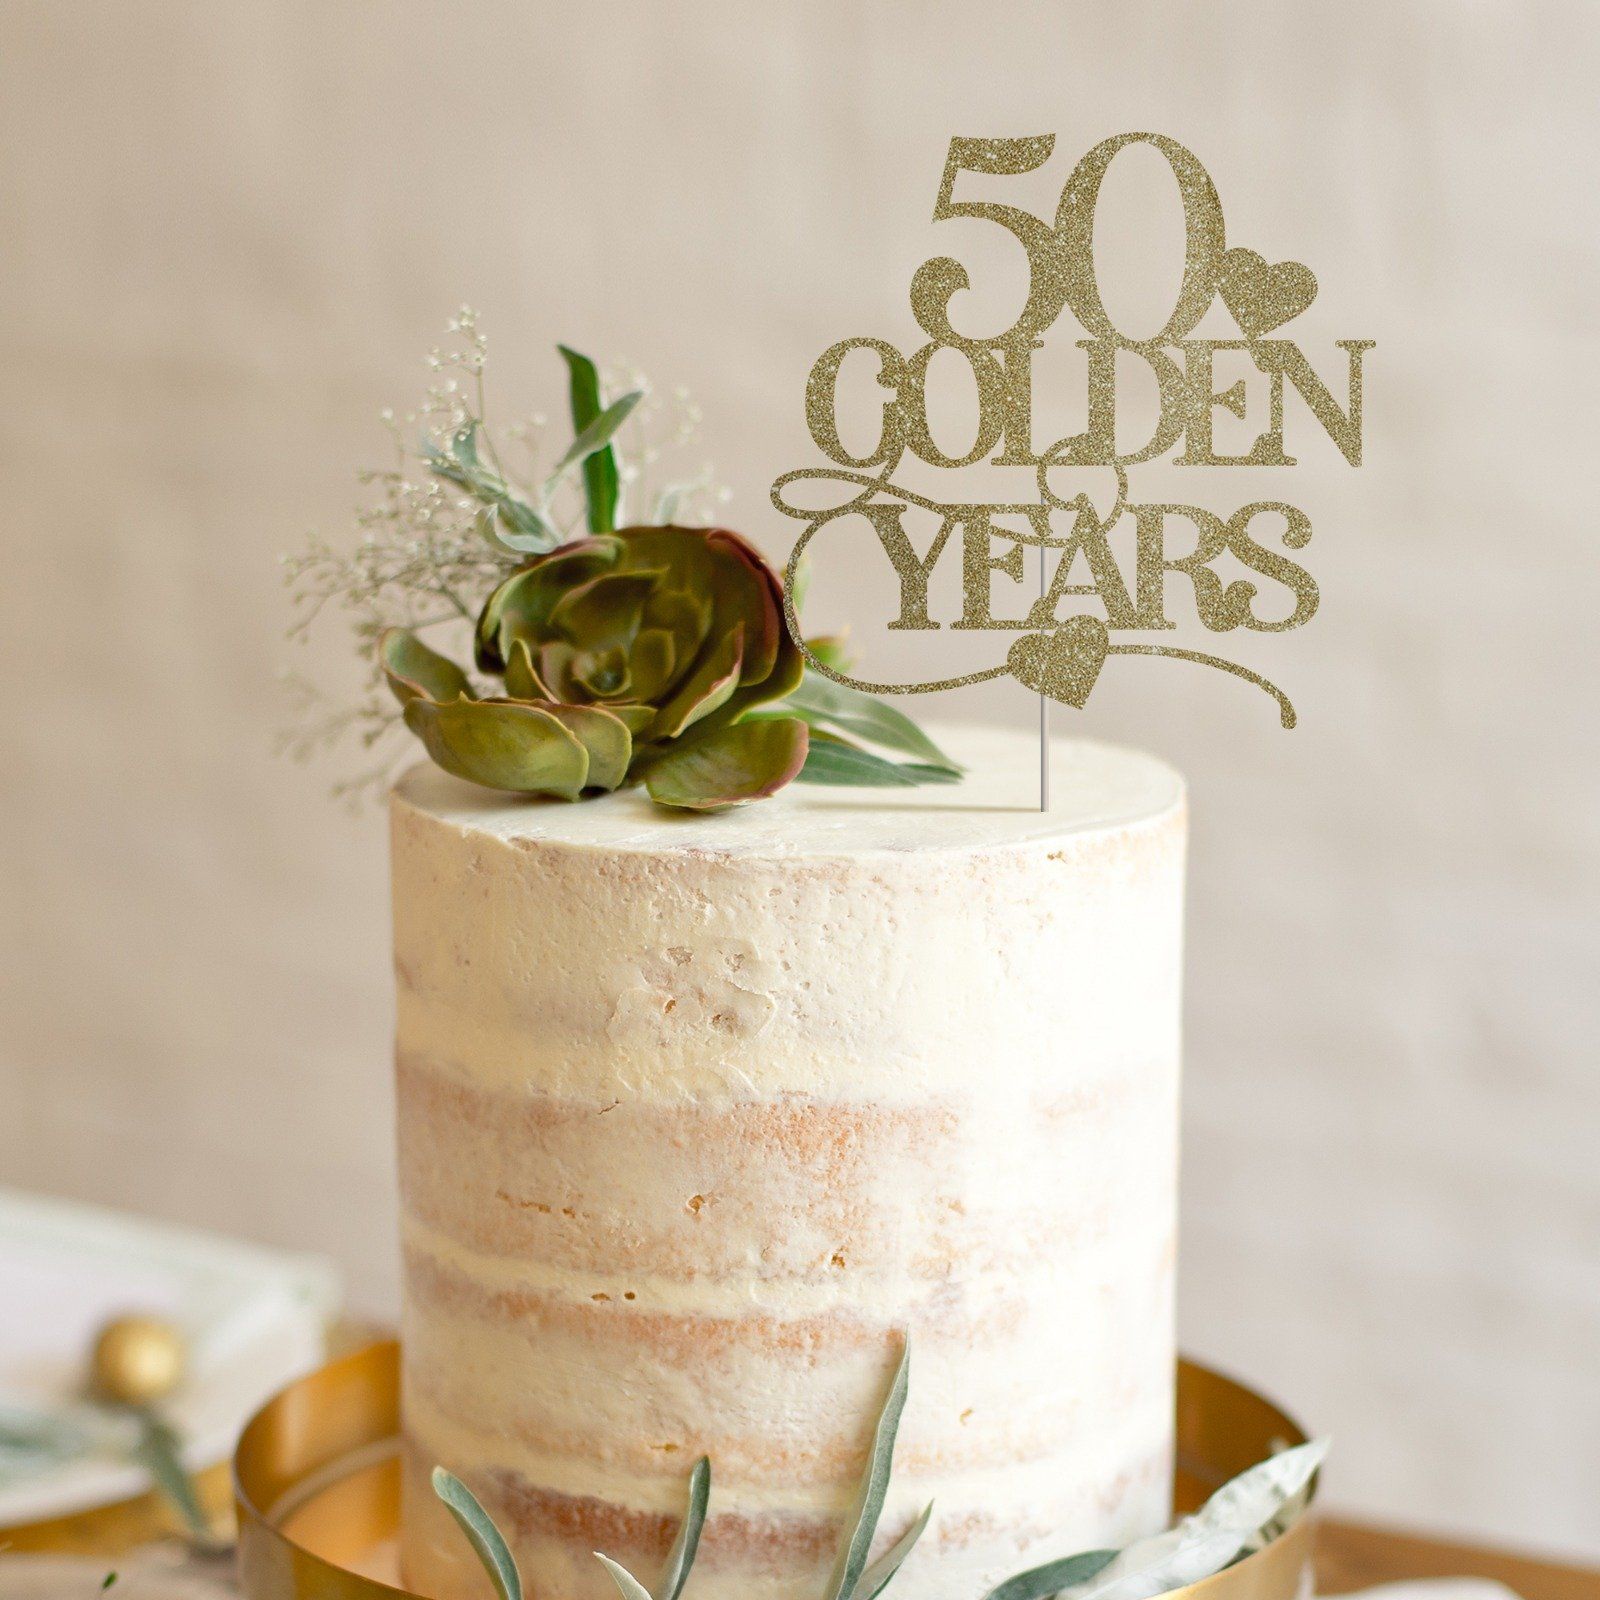 50th Wedding Anniversary Cake ~ - Decorated Cake by - CakesDecor